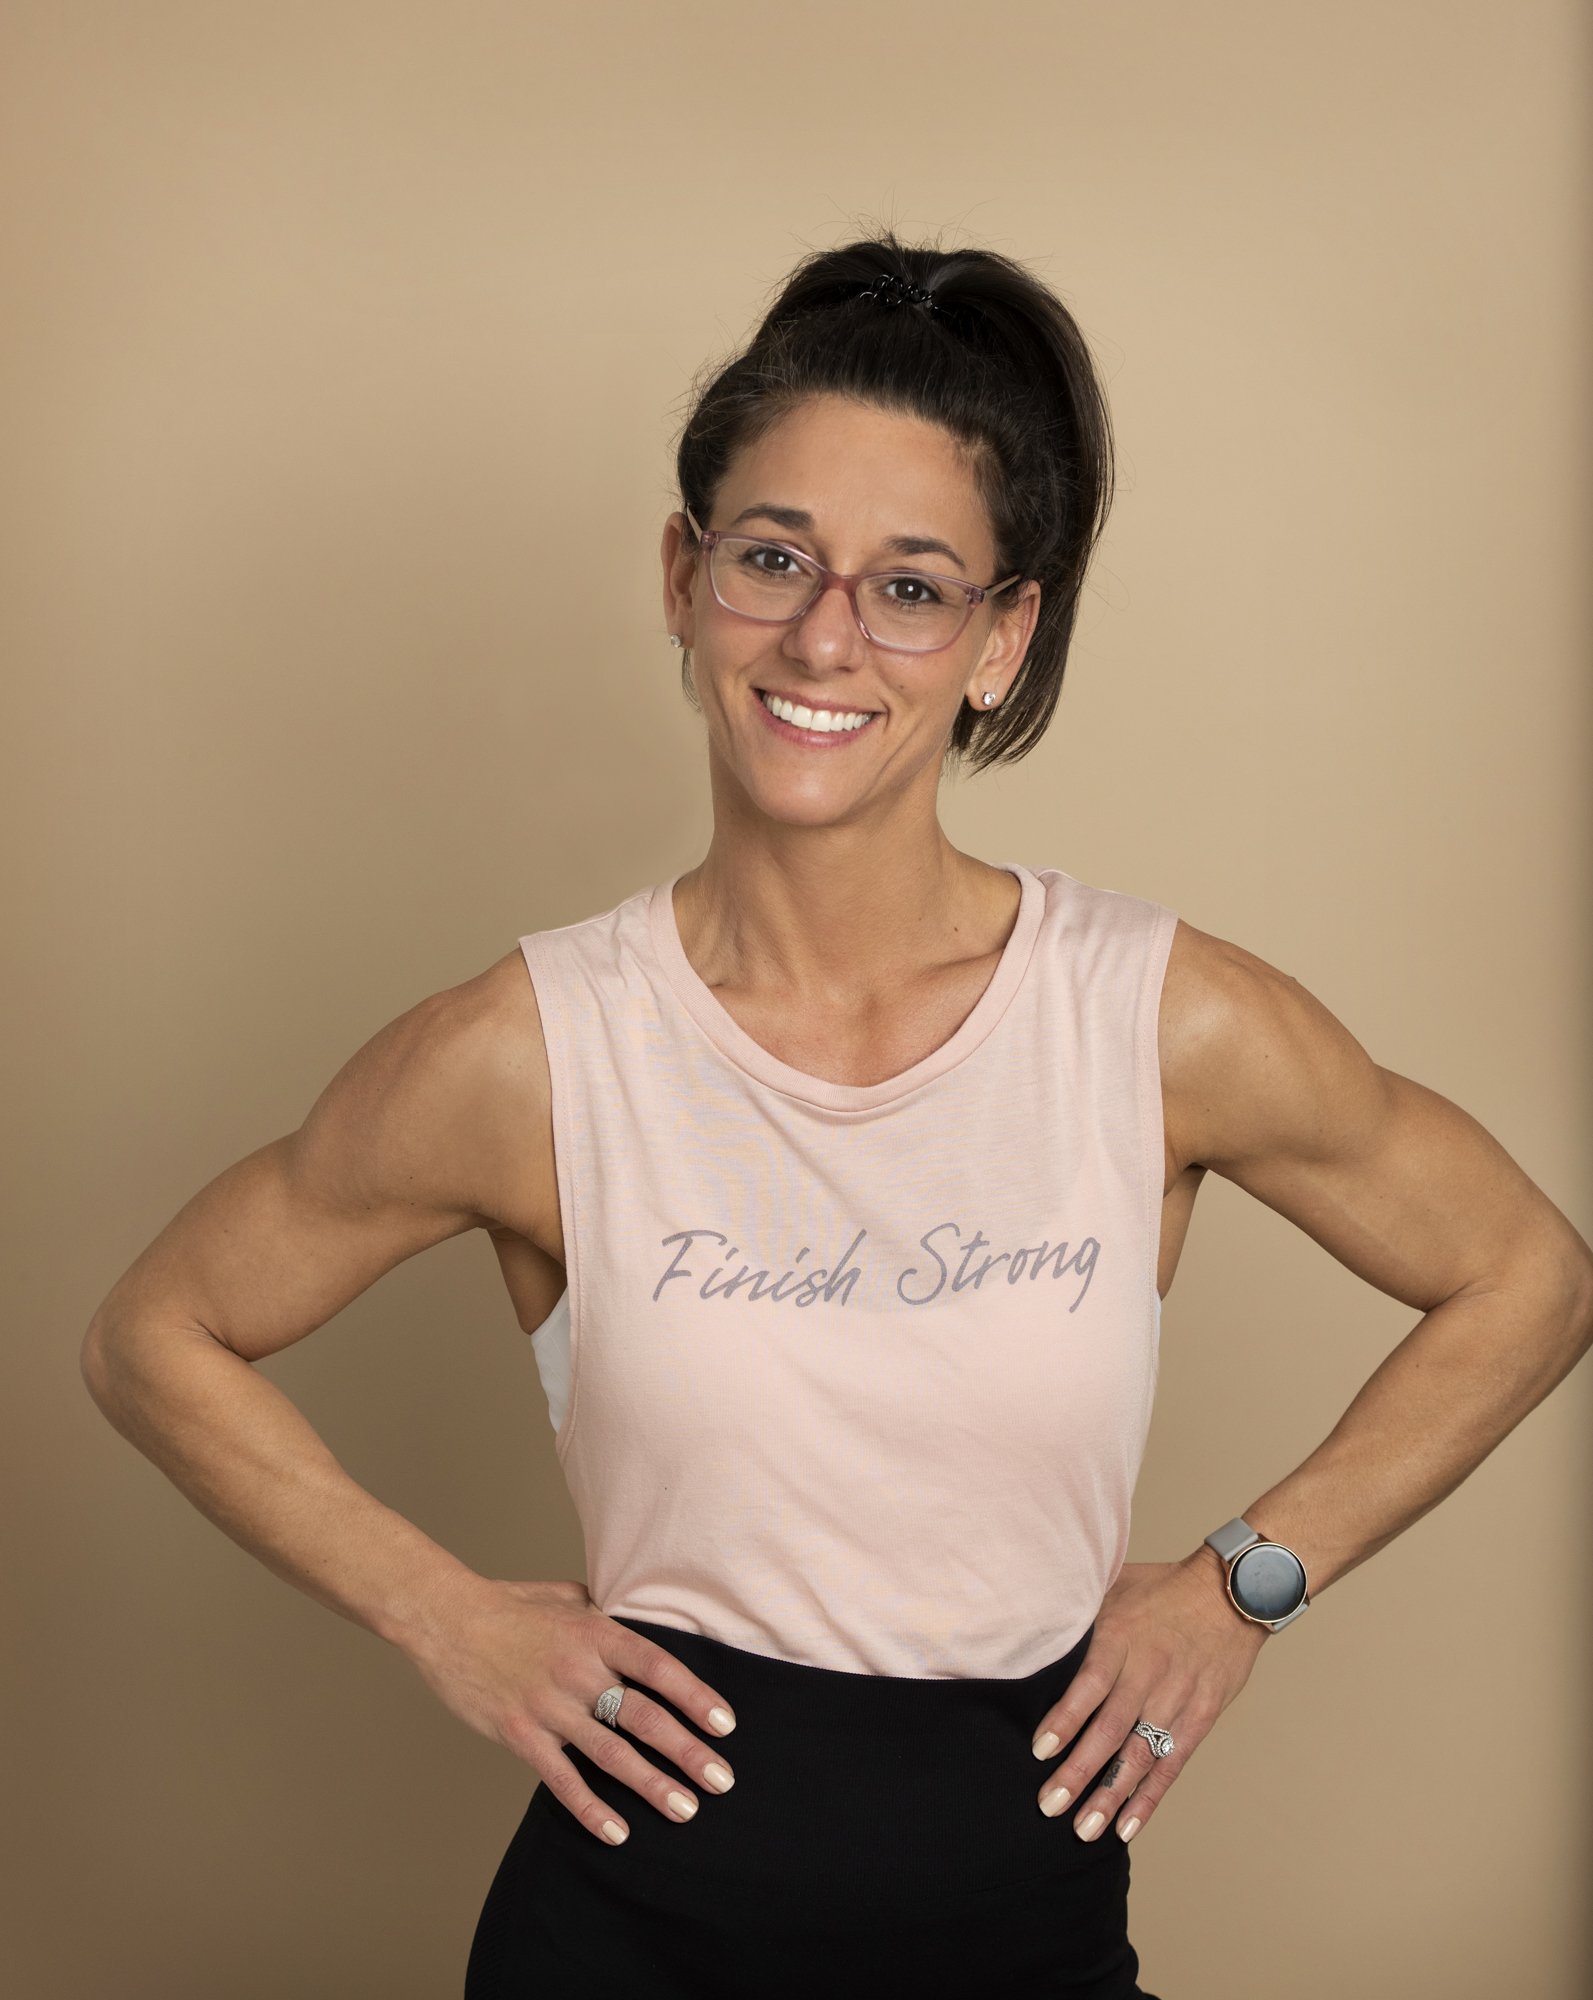 Branding photo of fitness trainer.jpg